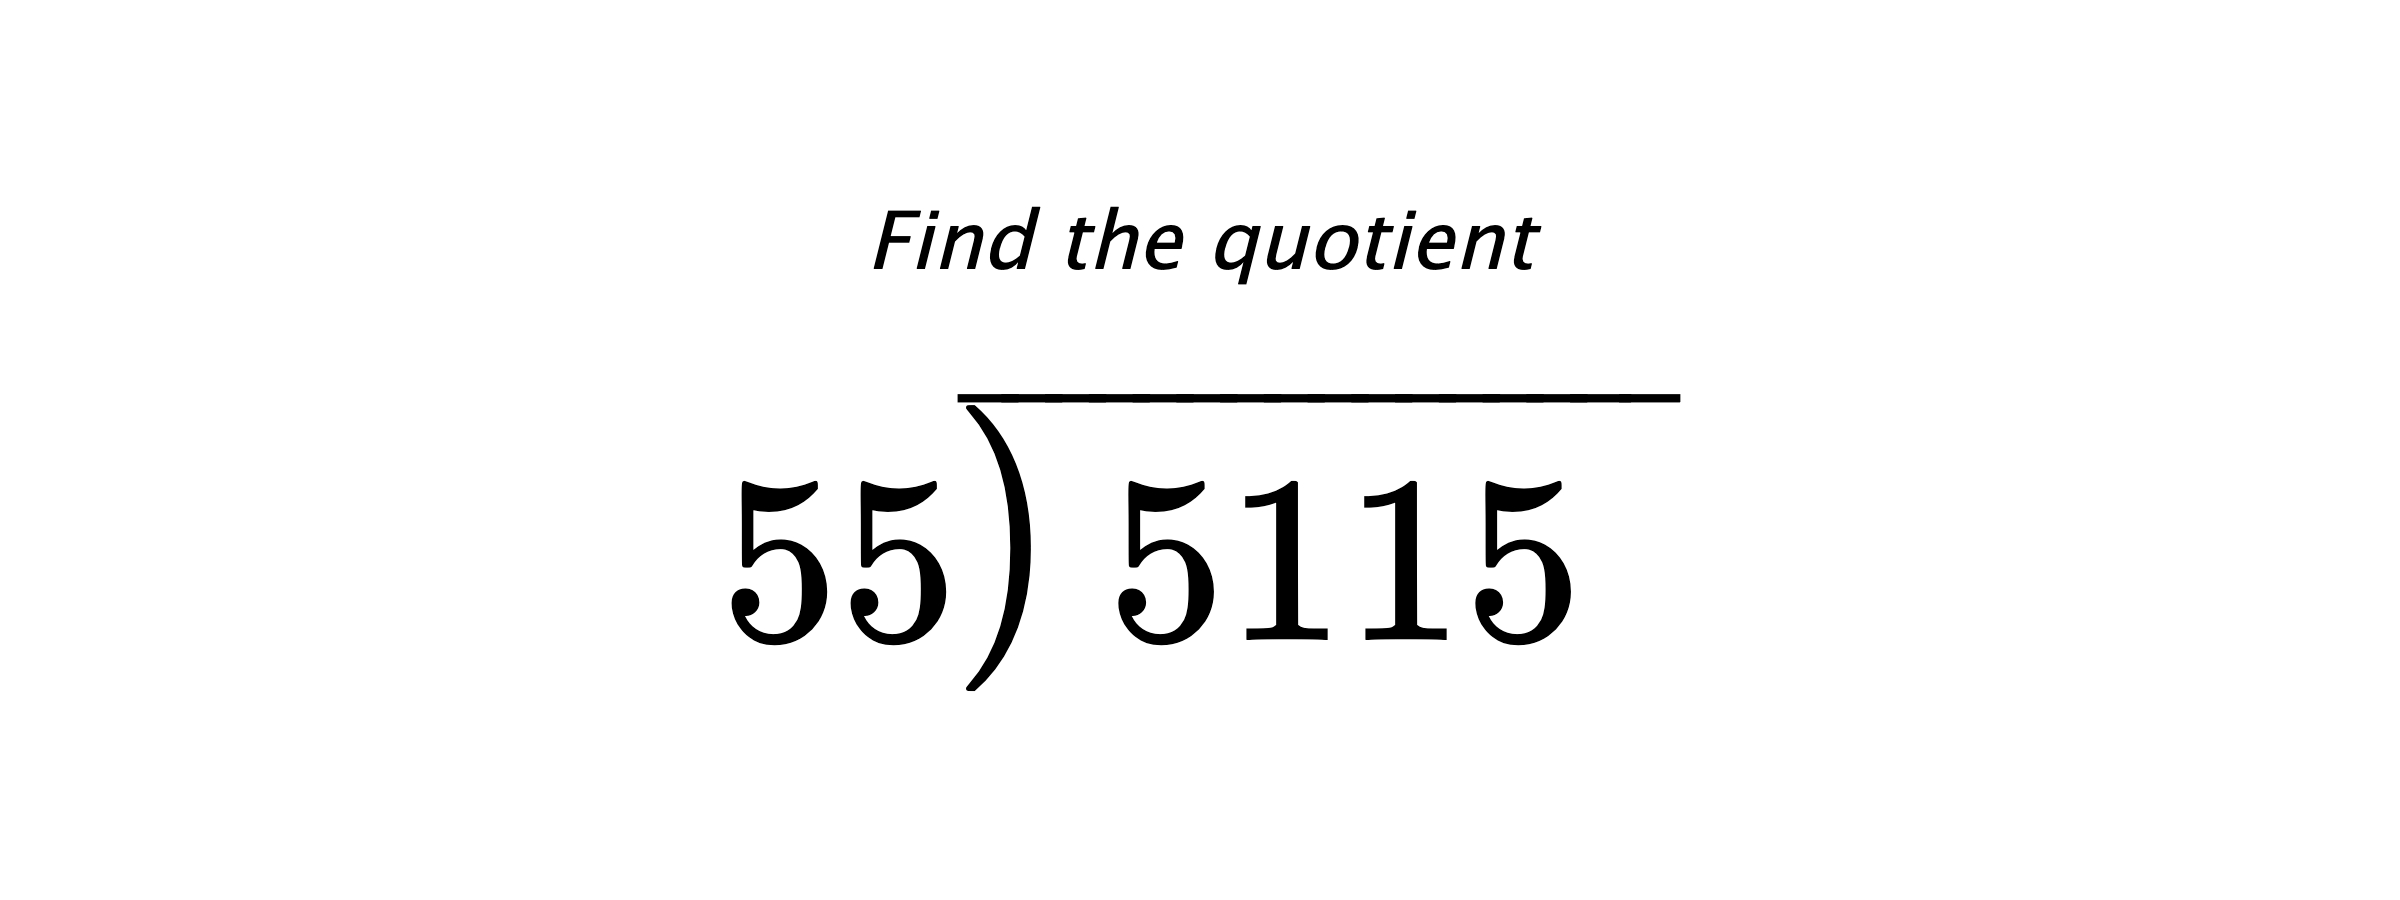 Find the quotient $ 55{\overline{\smash{\raise.3ex\hbox{$\big)$}}\,5115\phantom{)}}} $